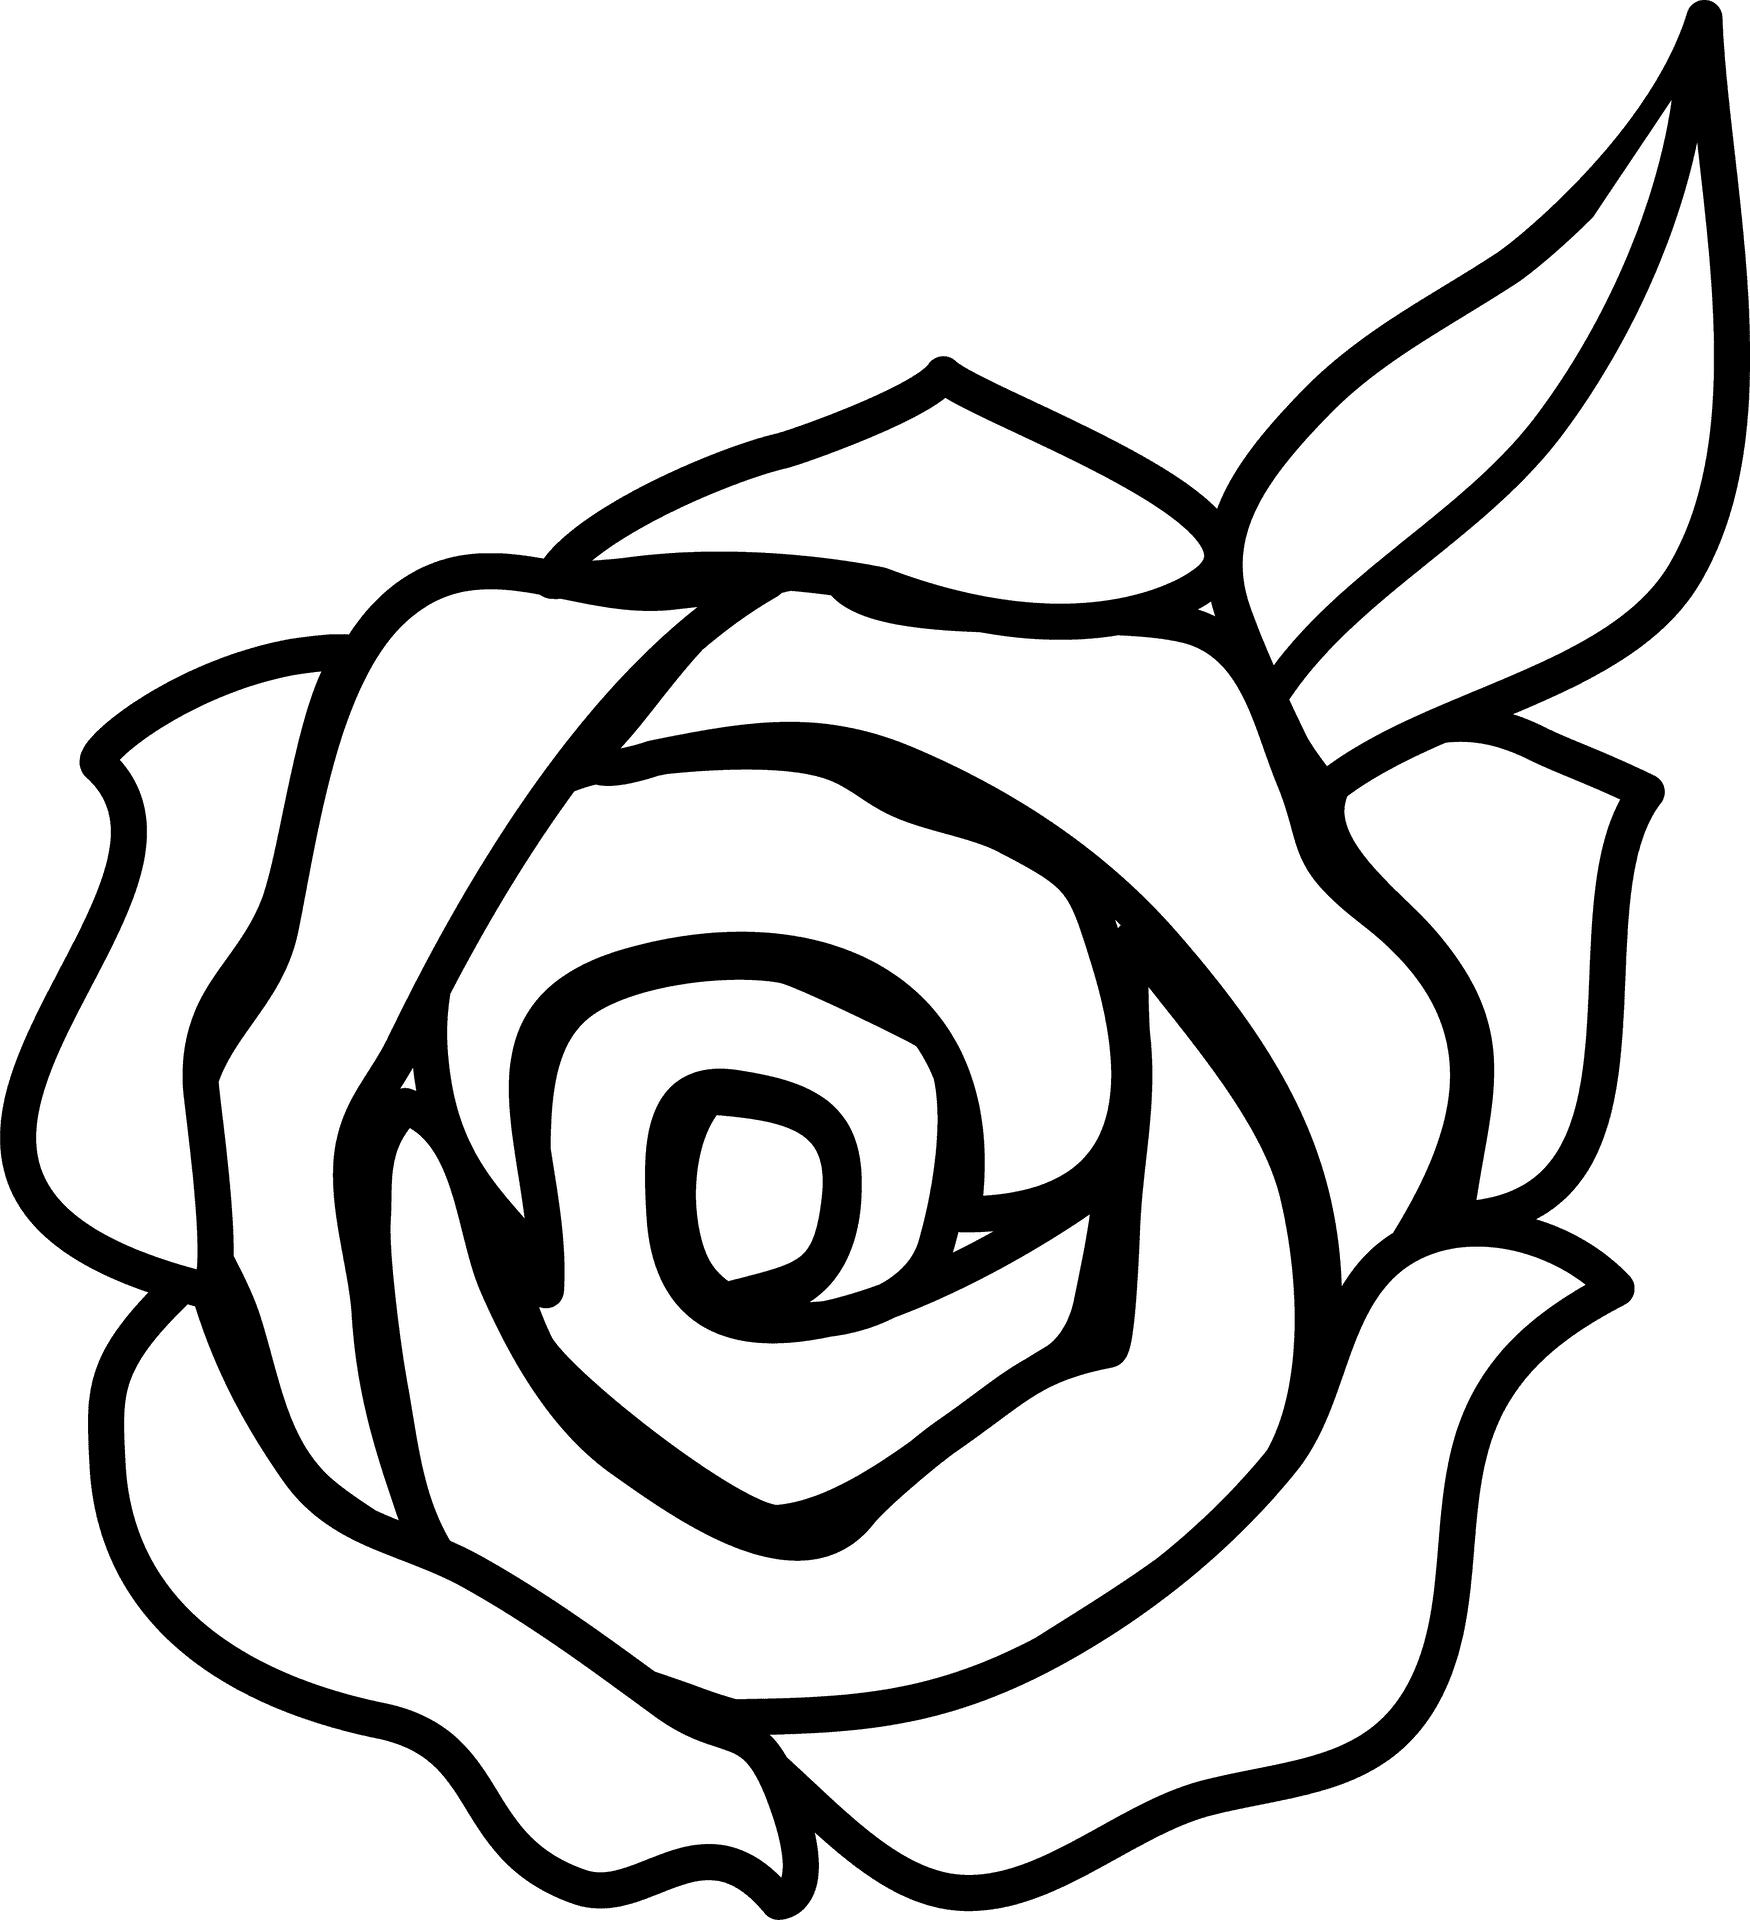 Simple Line Art Rose Drawing PNG image